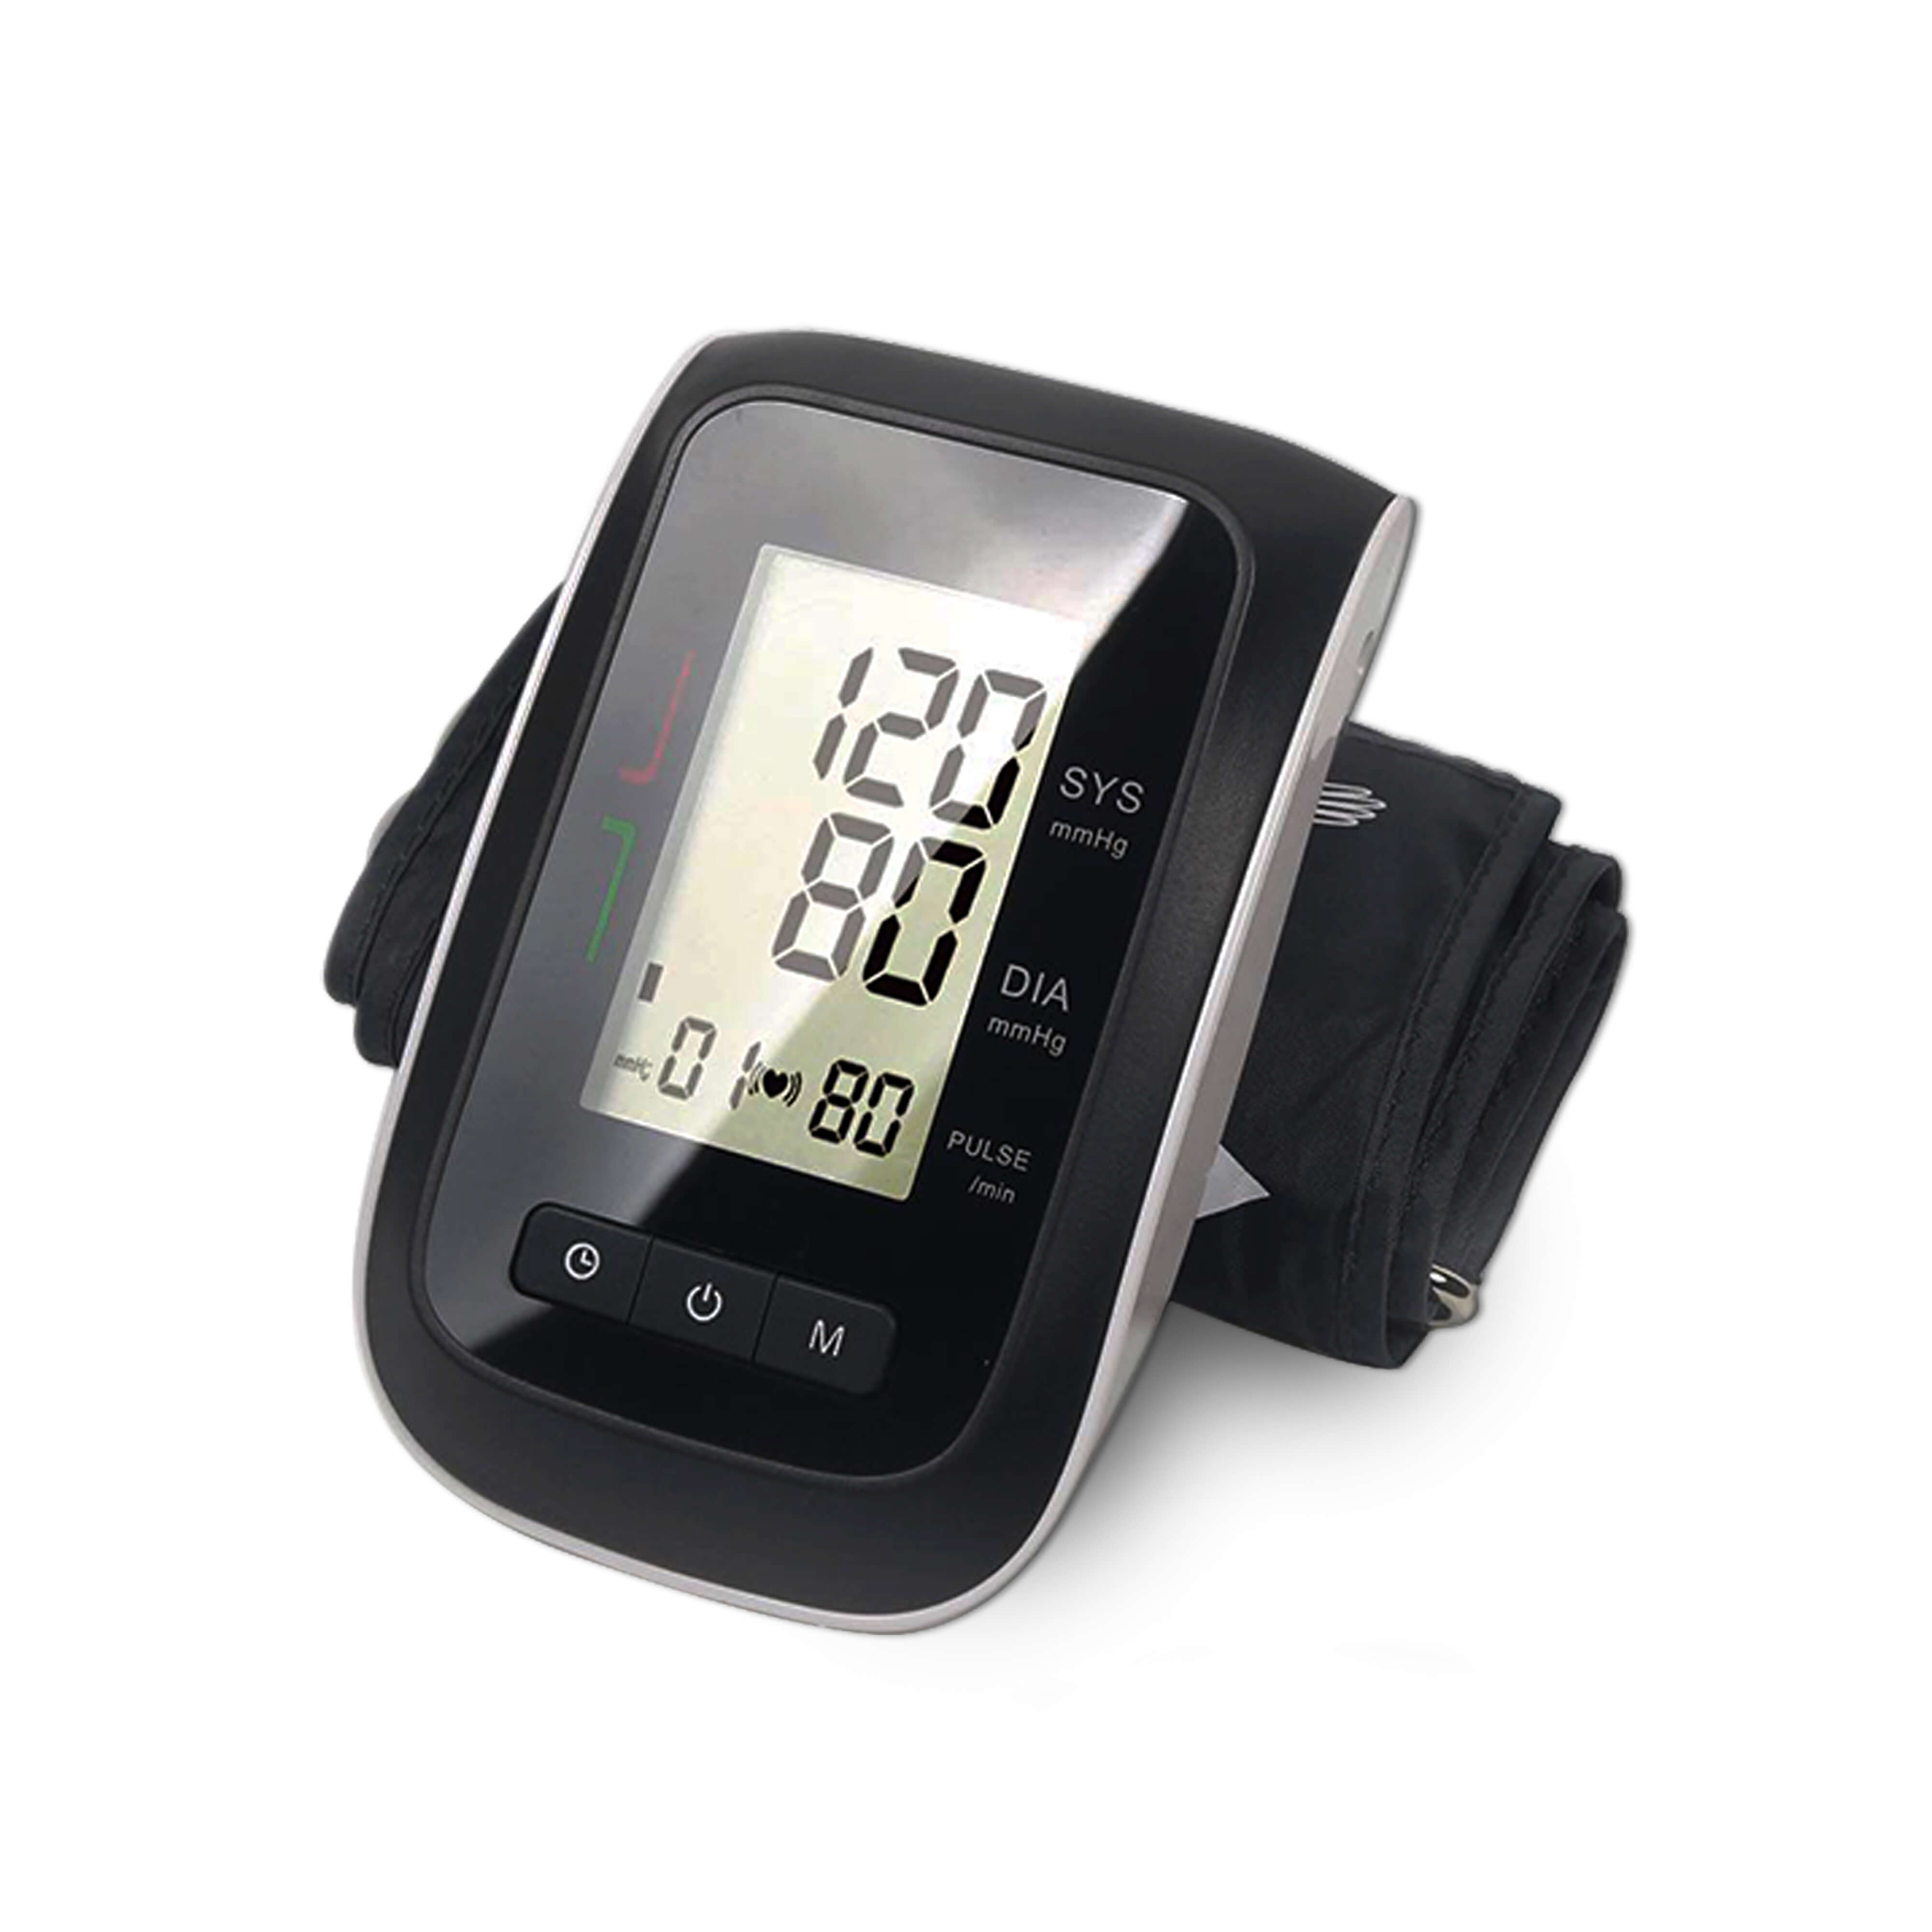 Yonker Bluetooth Upper Arm Digital Bp Machine Blood Pressure Monitor price Featured Image